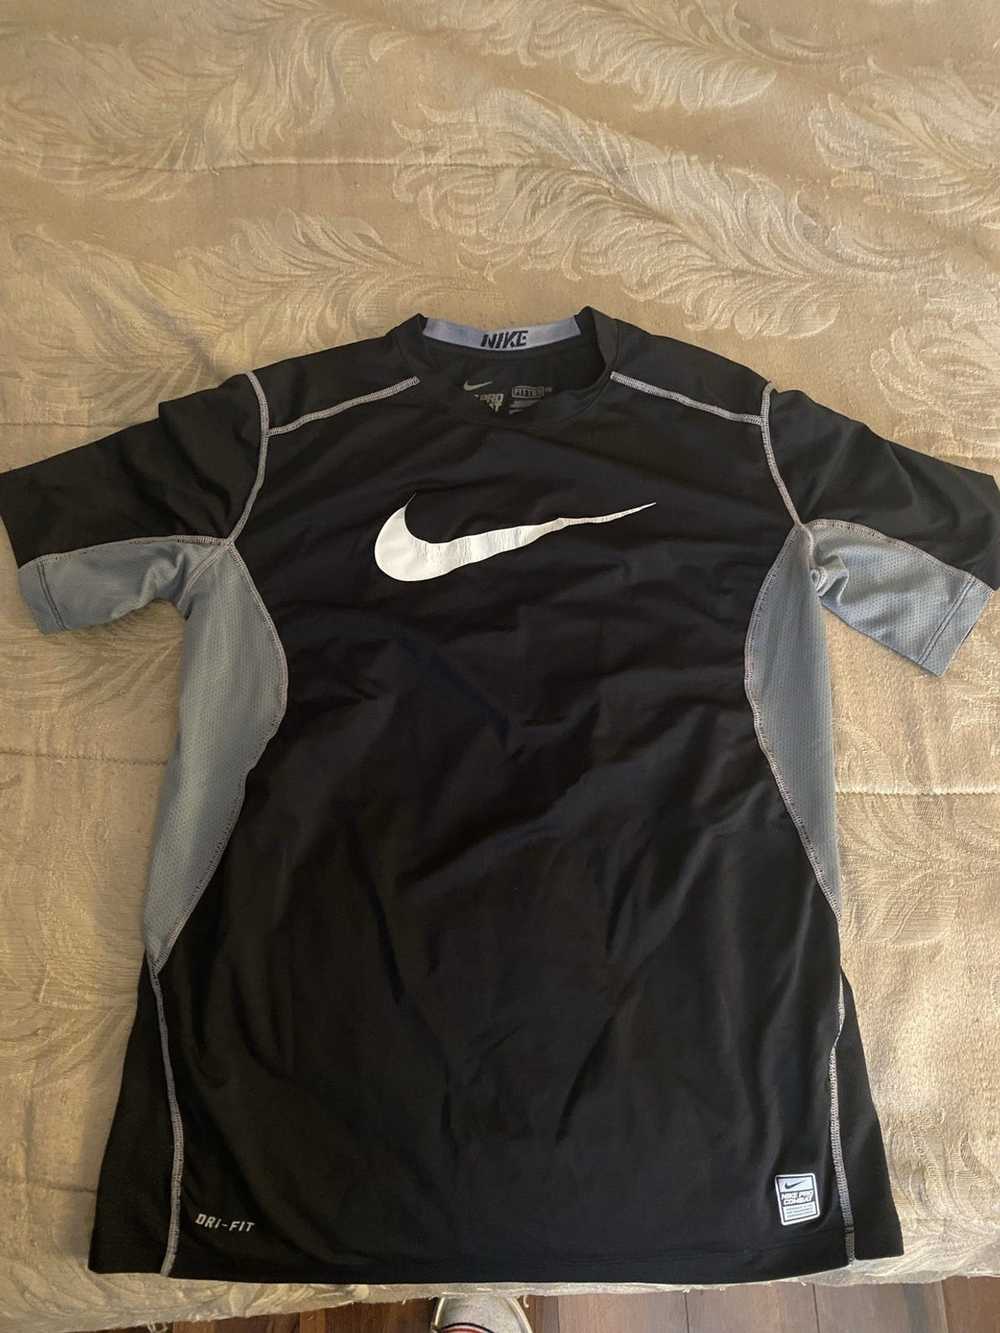 Jordan Brand × Nike Nike jordan tshirt - image 2